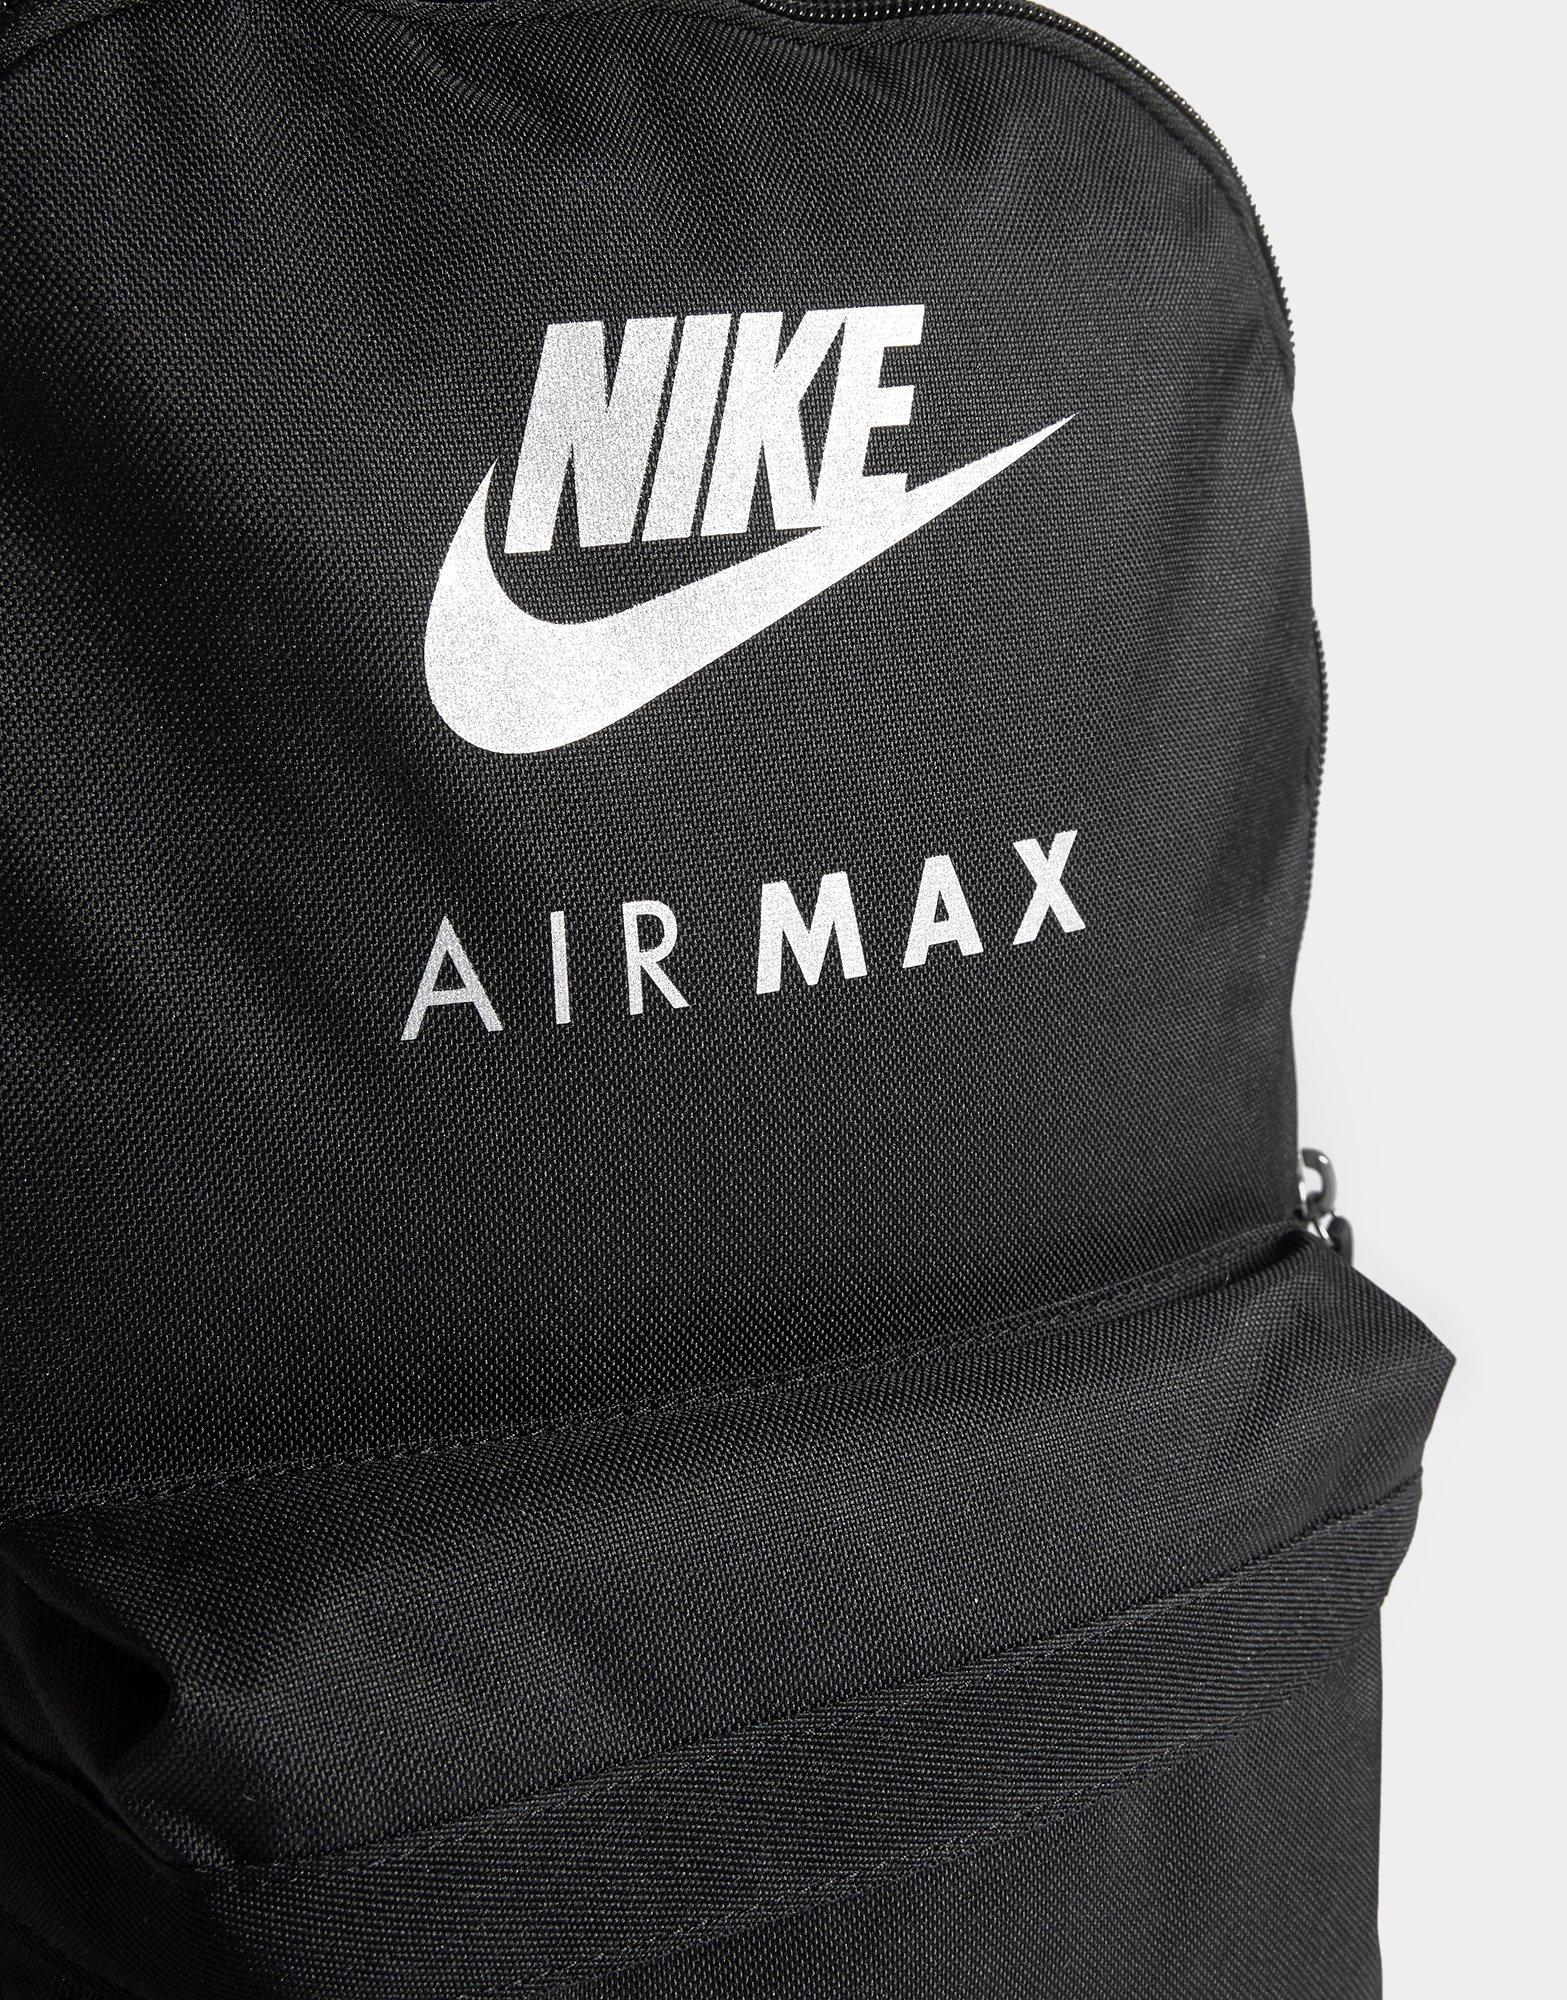 nike heritage air max backpack